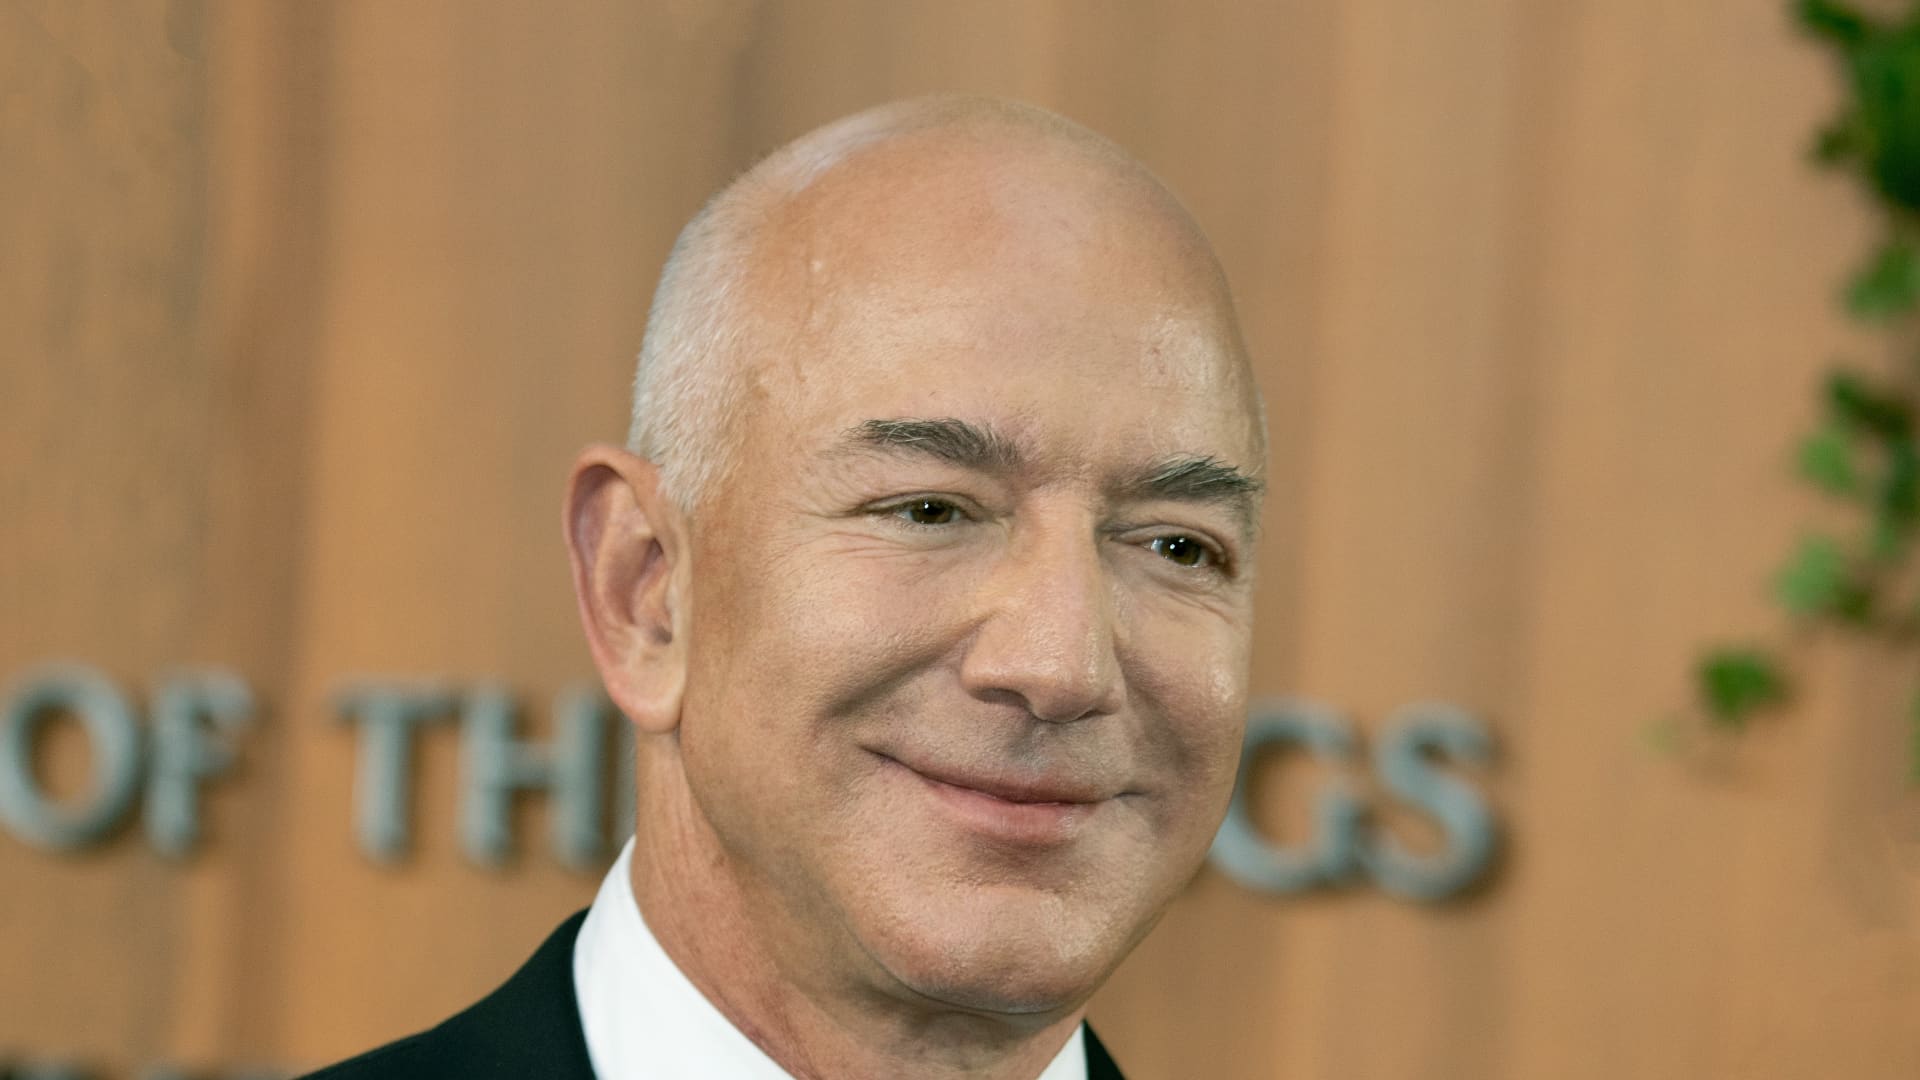 Jeff Bezos unloads around .4 billion in Amazon stock, bringing recent sales to 50 million shares